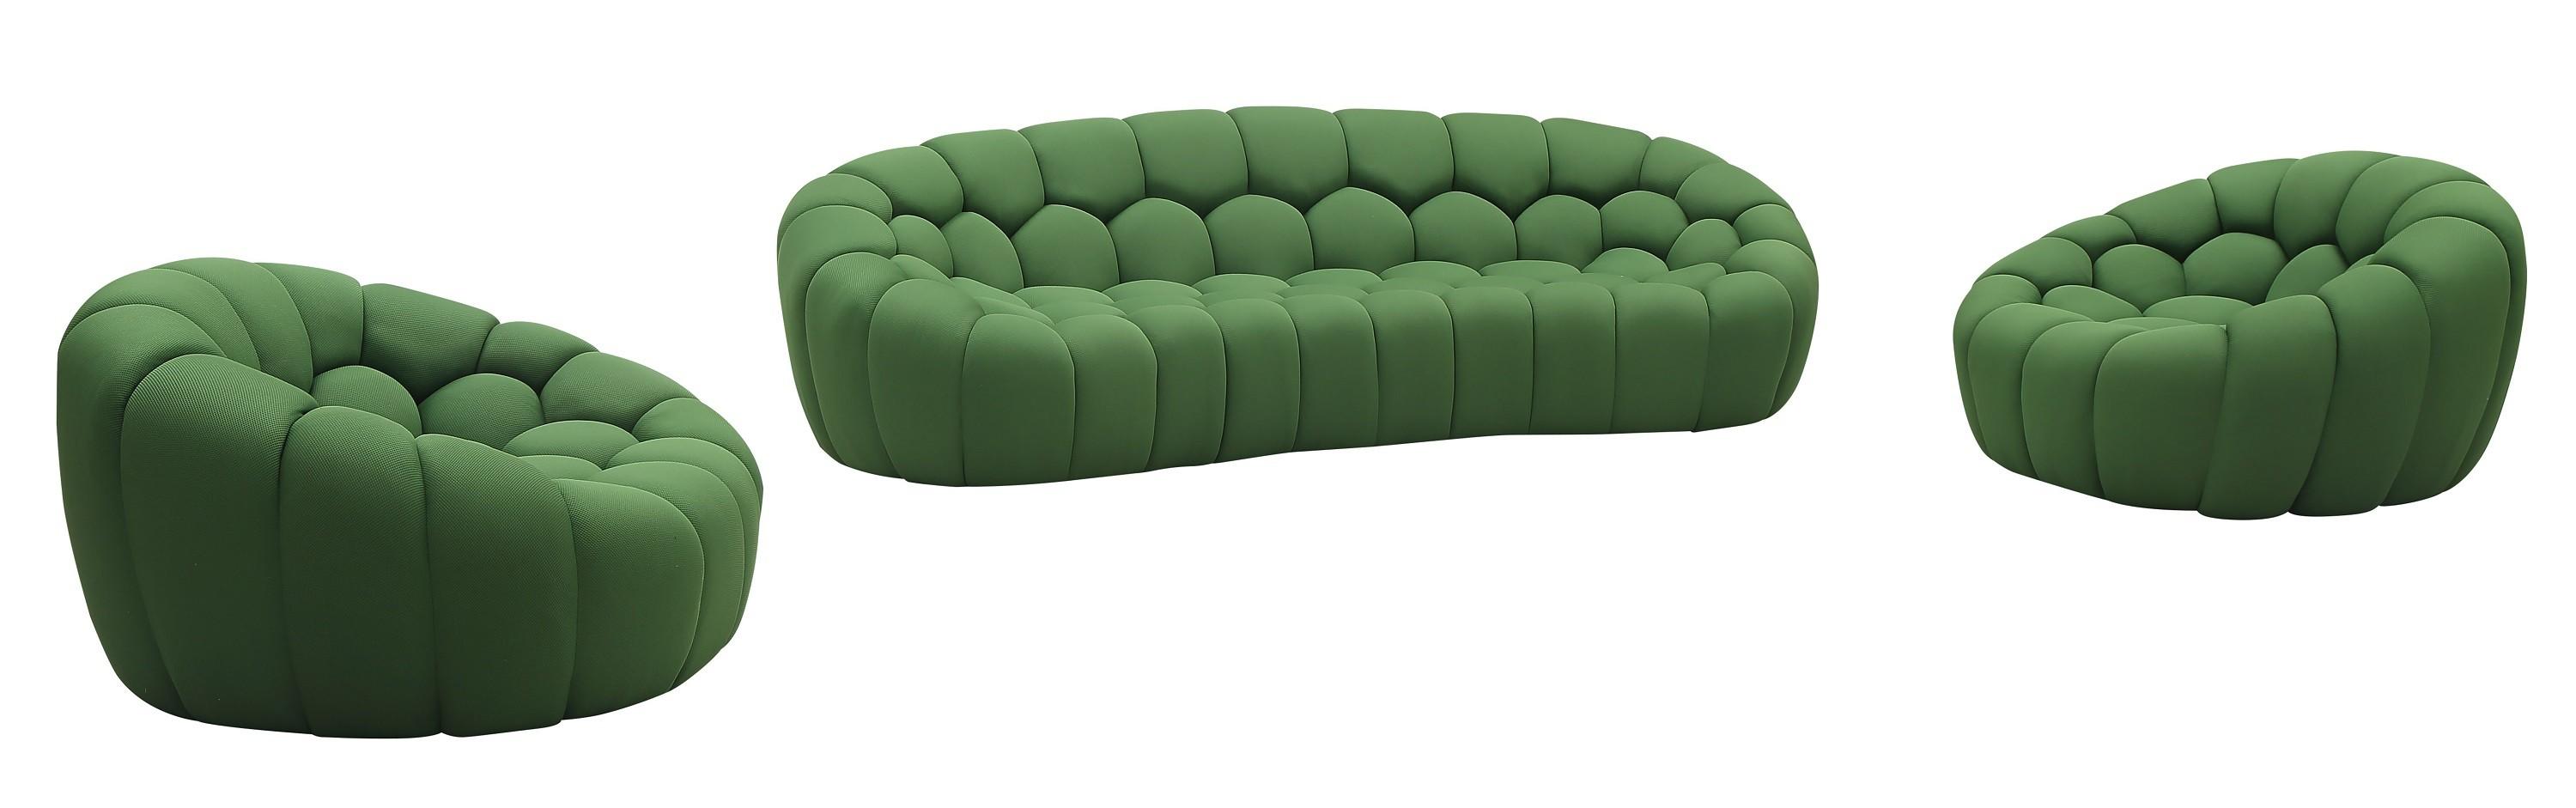 Contemporary Sofa Set Fantasy SKU 18442-GN-3PC in Green Fabric